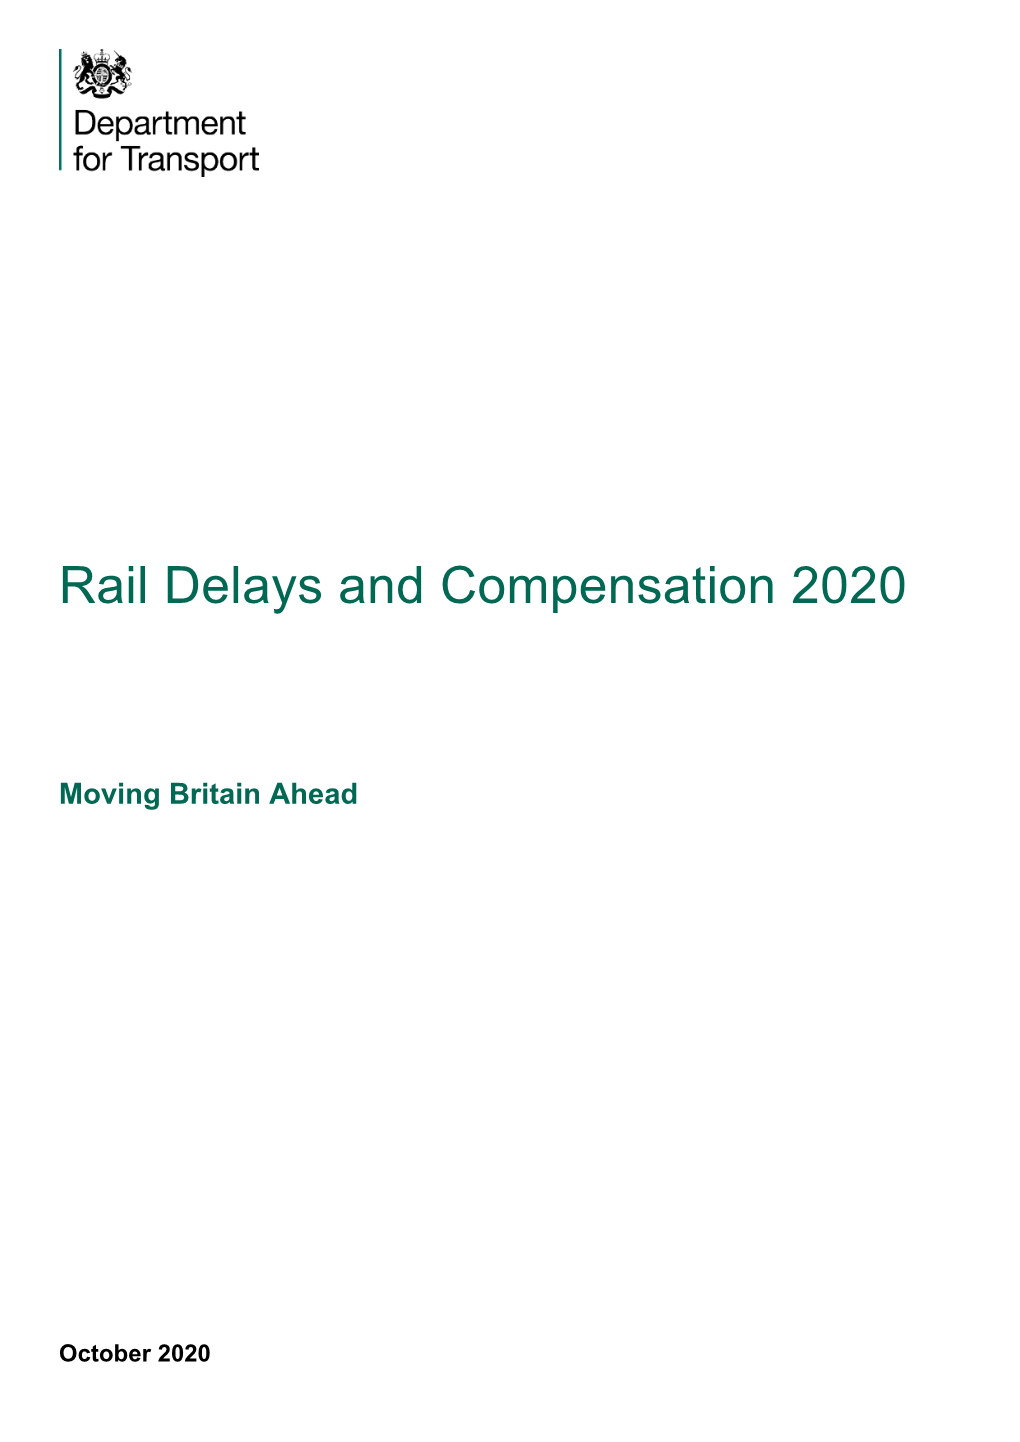 Rail Delays and Compensation Report: 2020